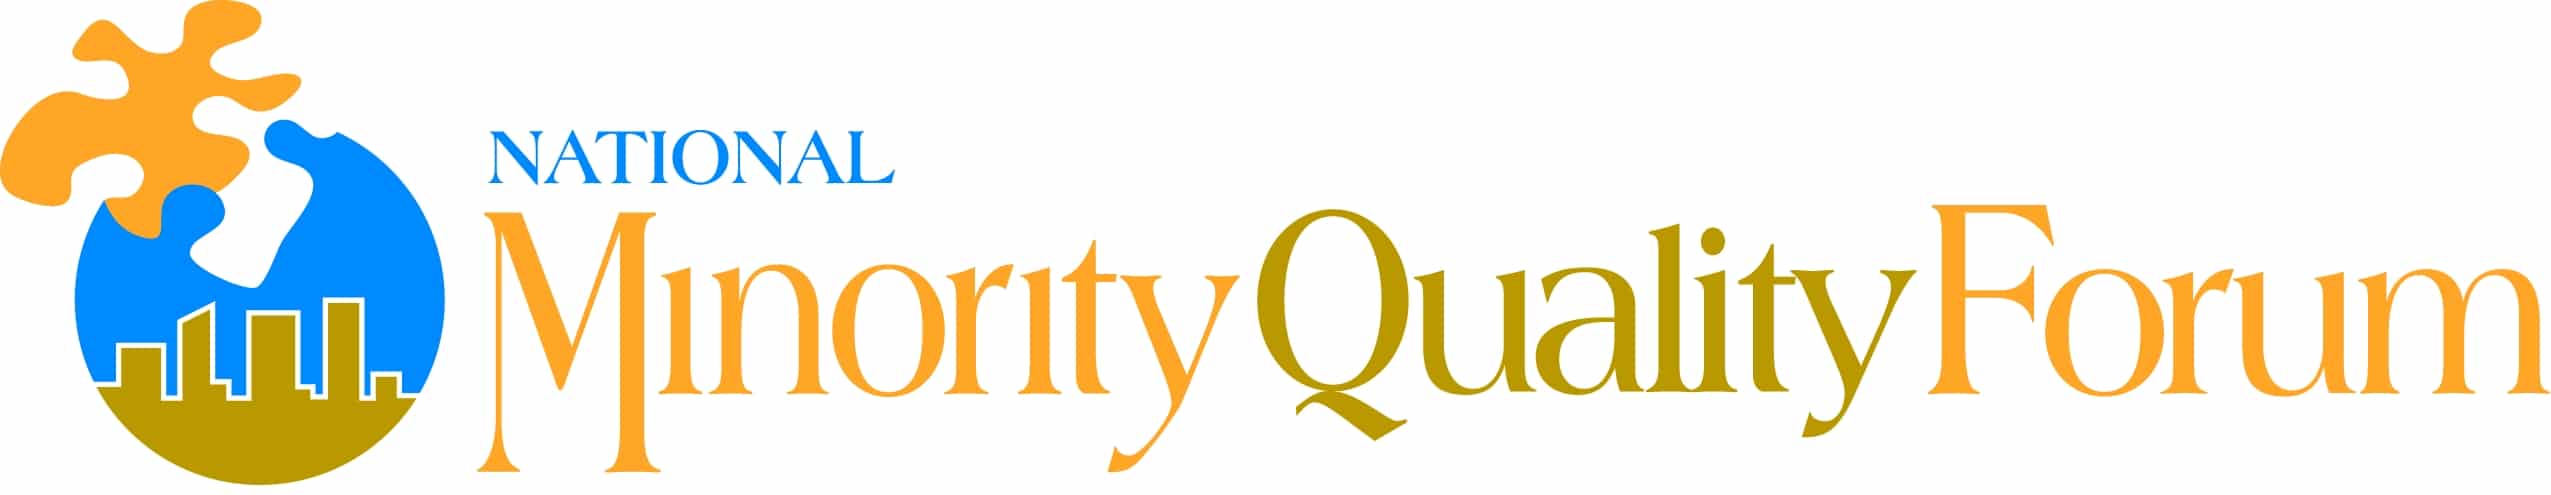 National Minority Quality Forum logo.